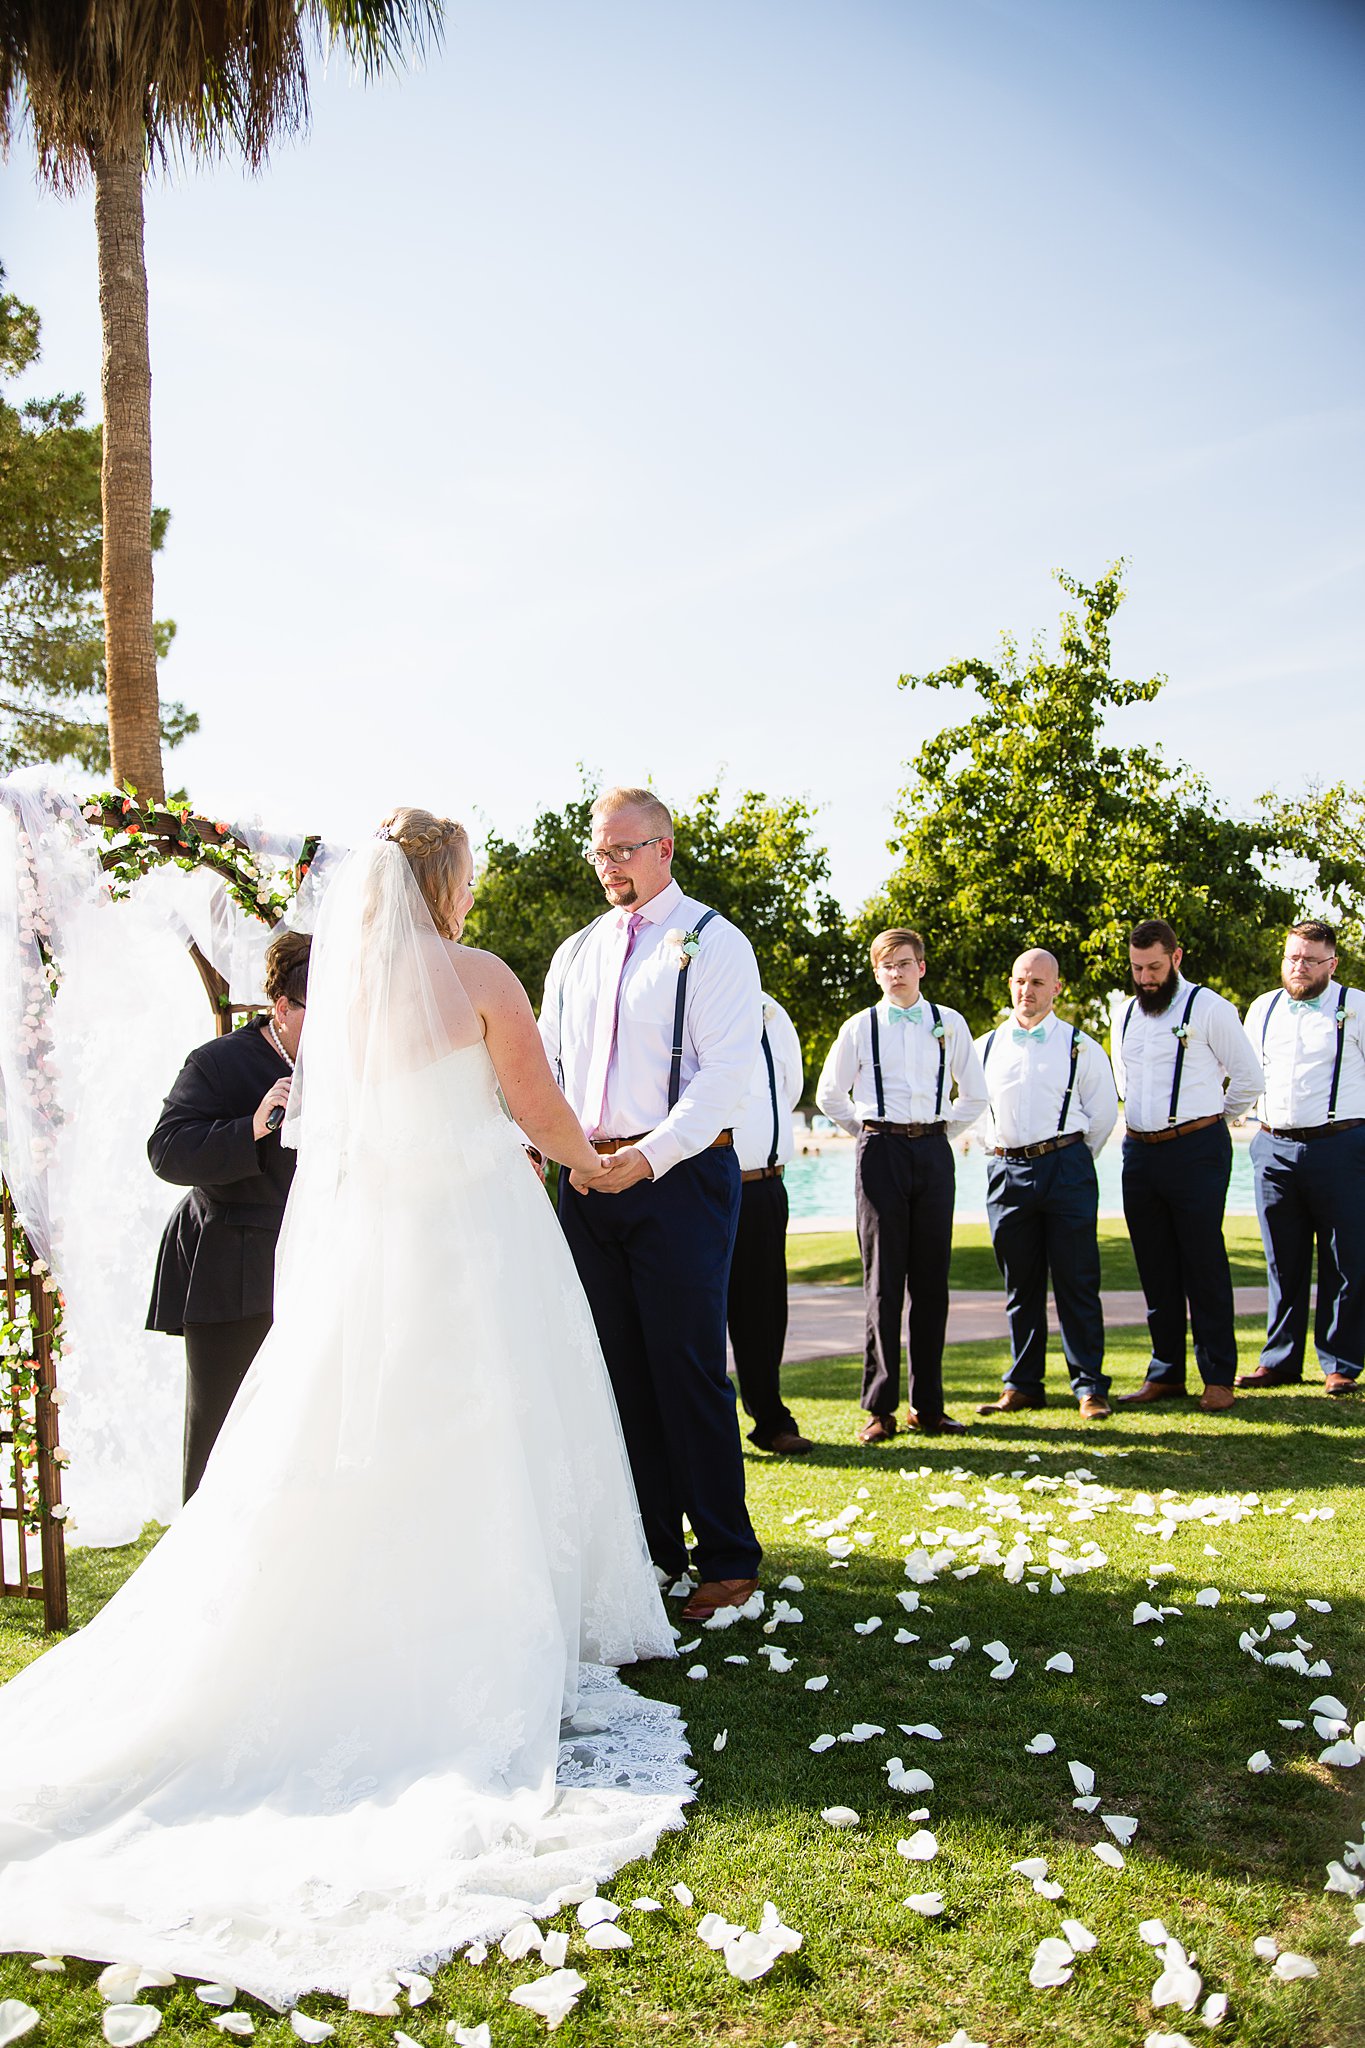 Wedding ceremony at Val Vista Lakes by Arizona wedding photographer PMA Photography.